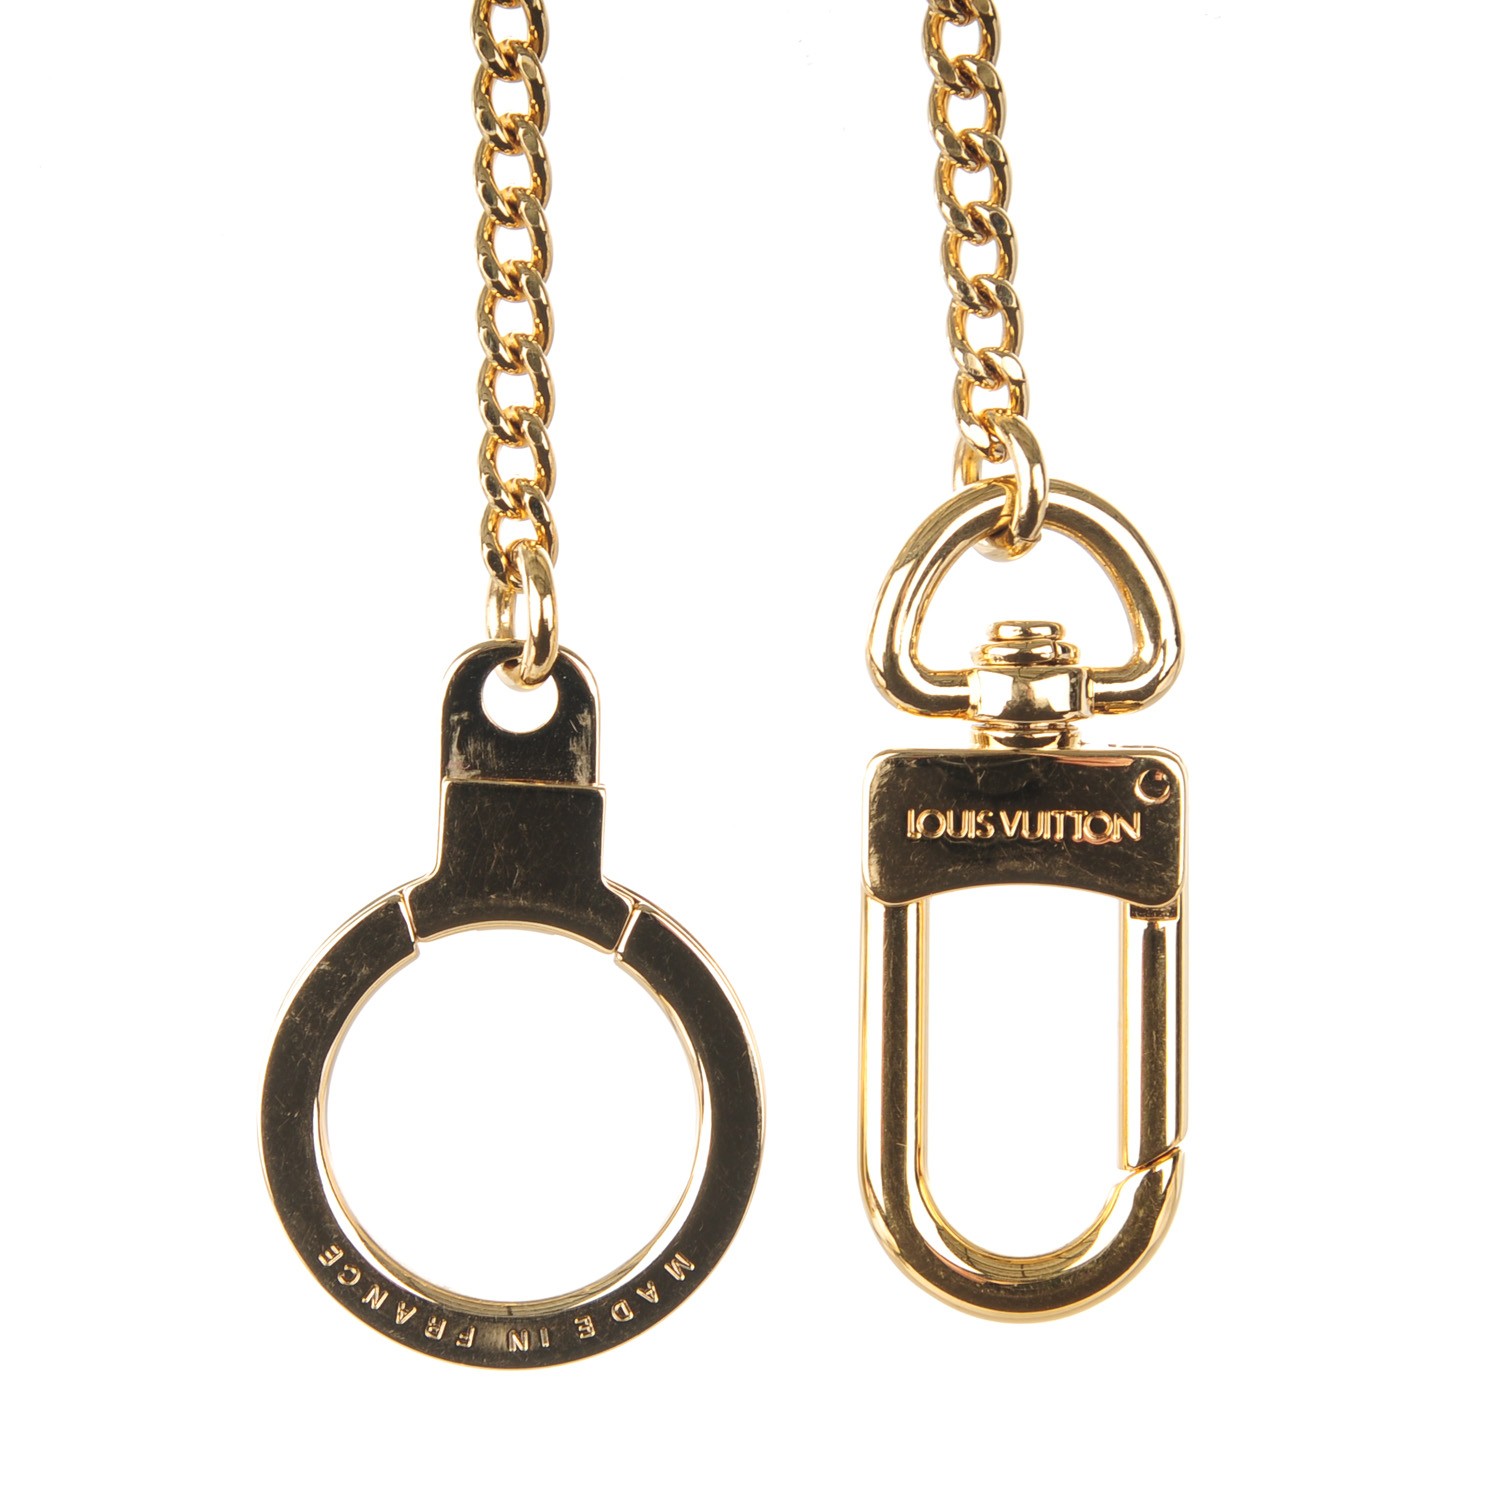 LOUIS VUITTON Pochette Extender Key Ring Chain Gold 166440